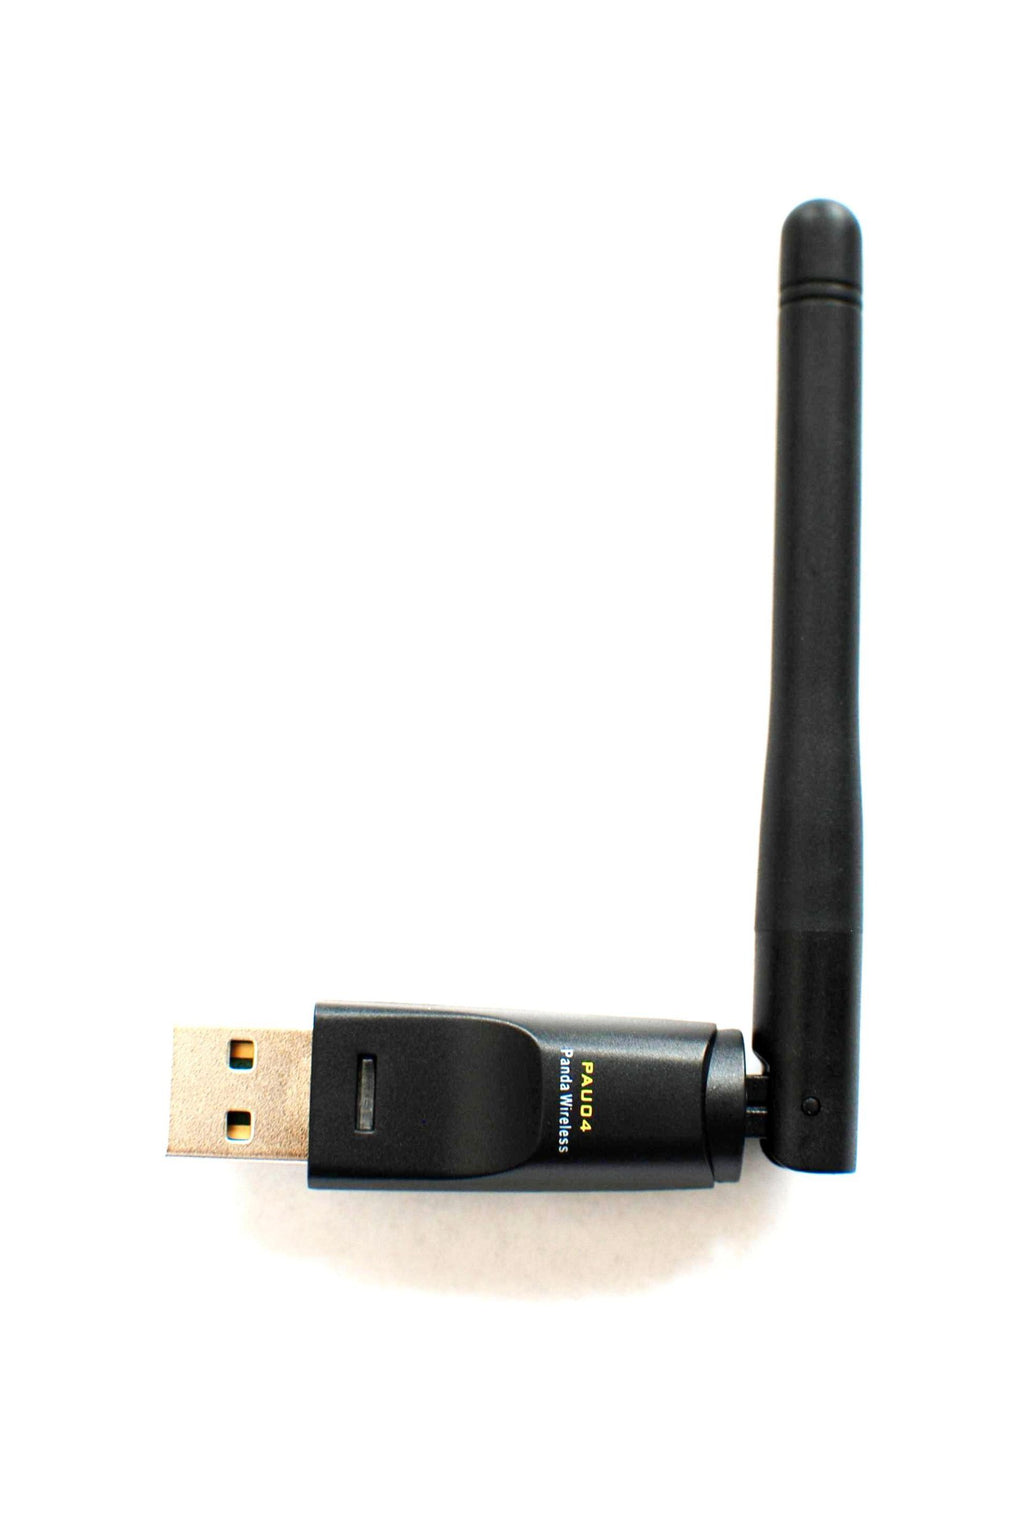 Panda Mid Range 150Mbps Wireless N USB Adapter w/ 2dBi Antenna